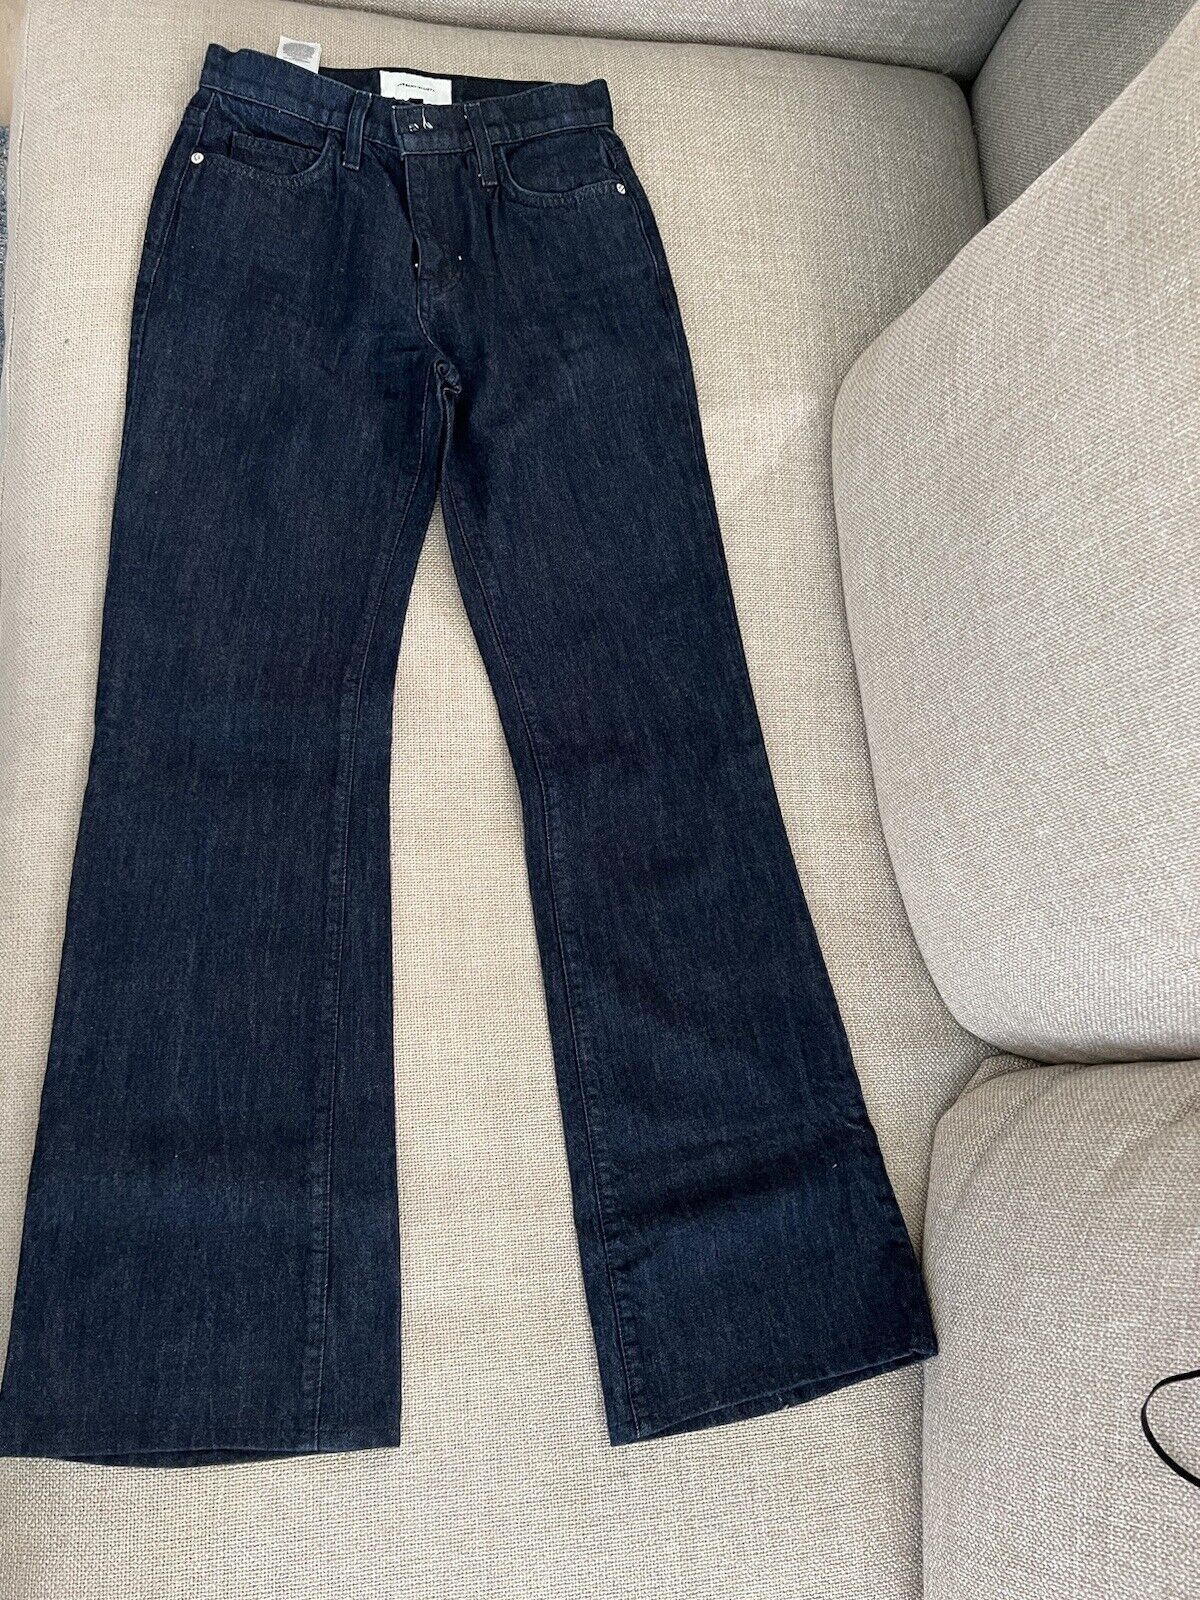 Current Elliott jeans SIZE 25 - image 1